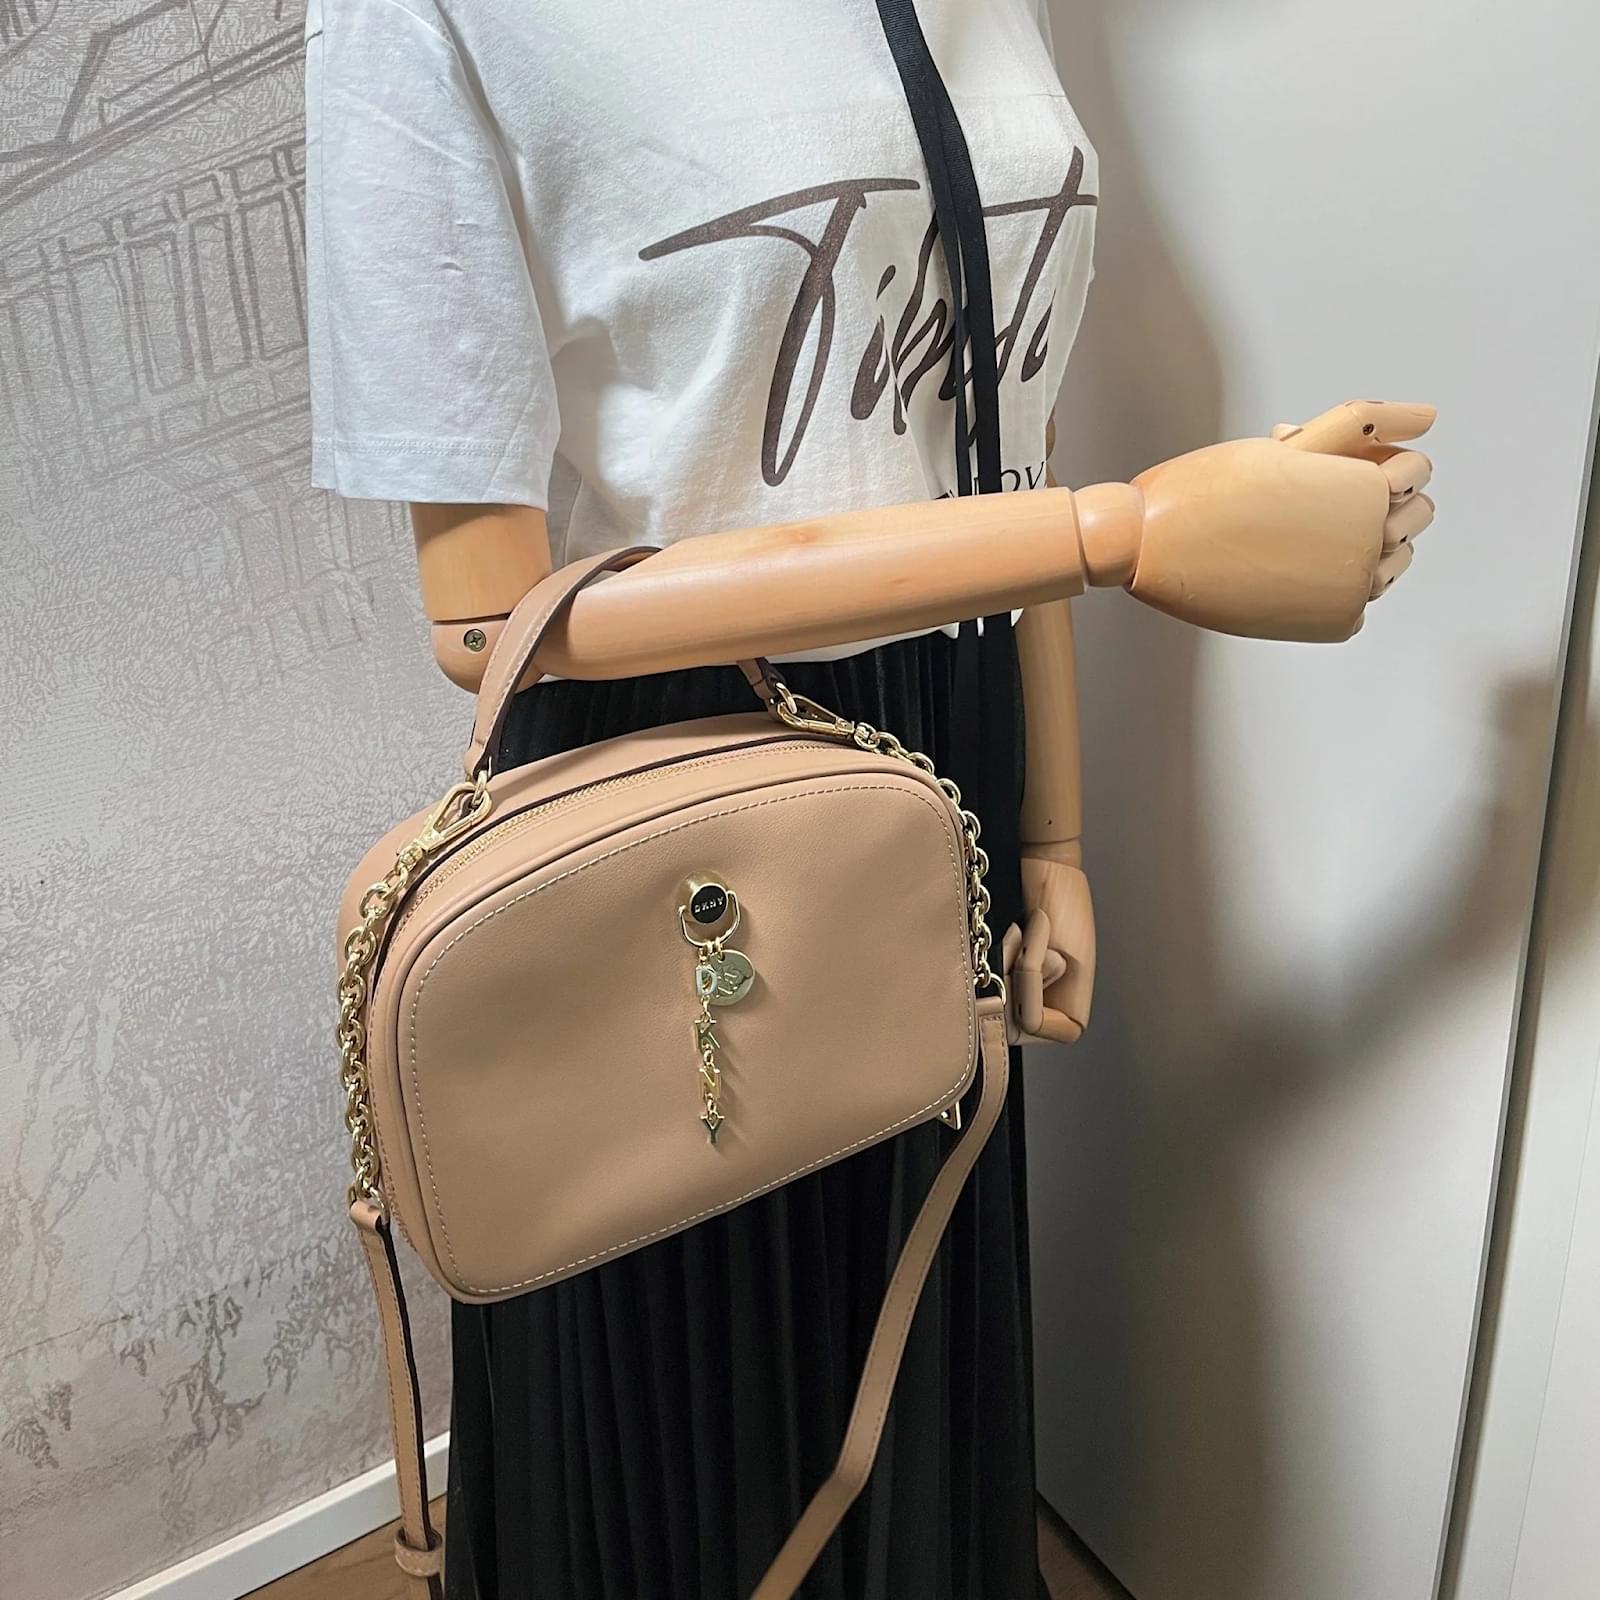 DKNY: crossbody bags for woman - Beige